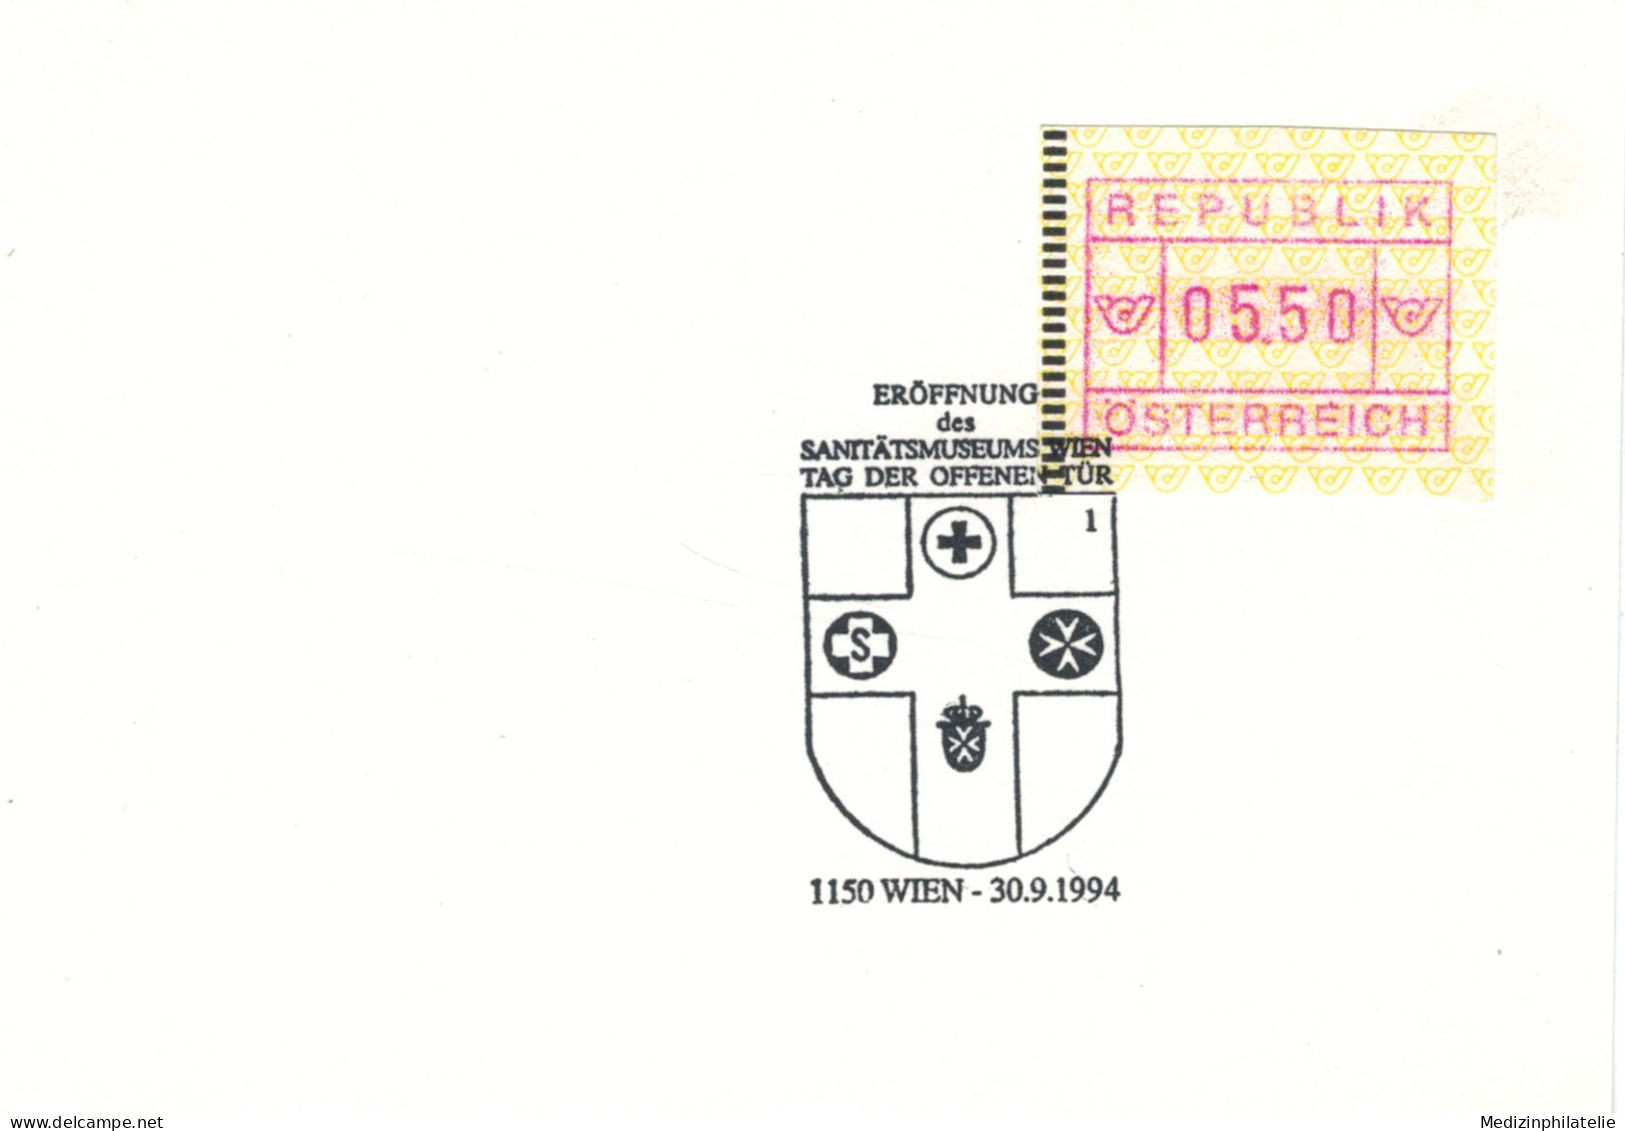 Rotes Kreuz - 1150 Wien 1994 Wappen - First Aid